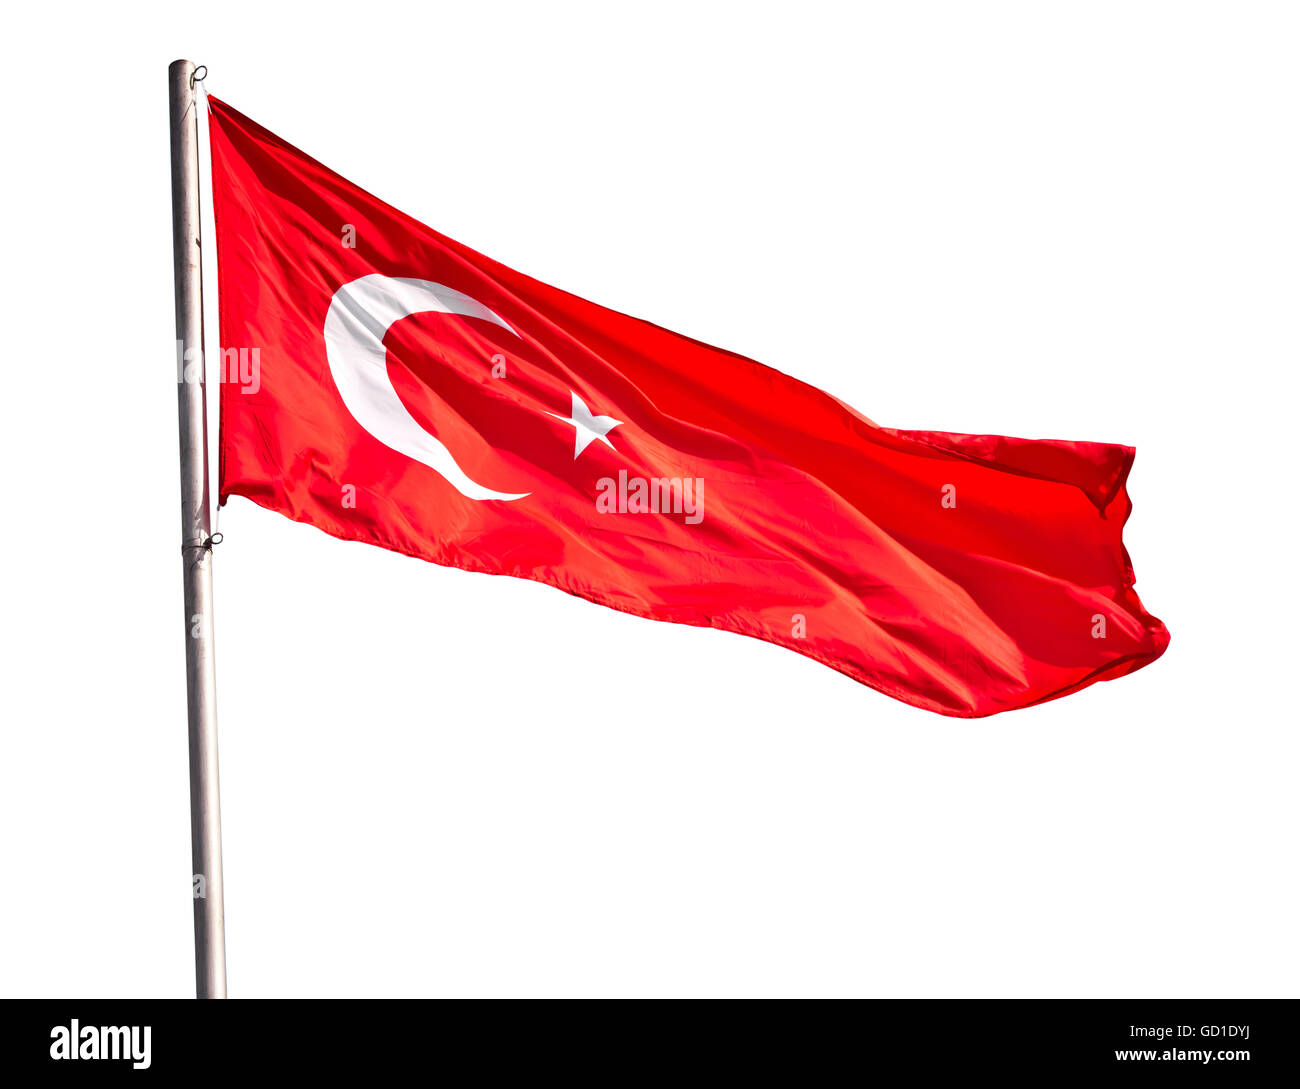 Turkish flag waving Stock Photo